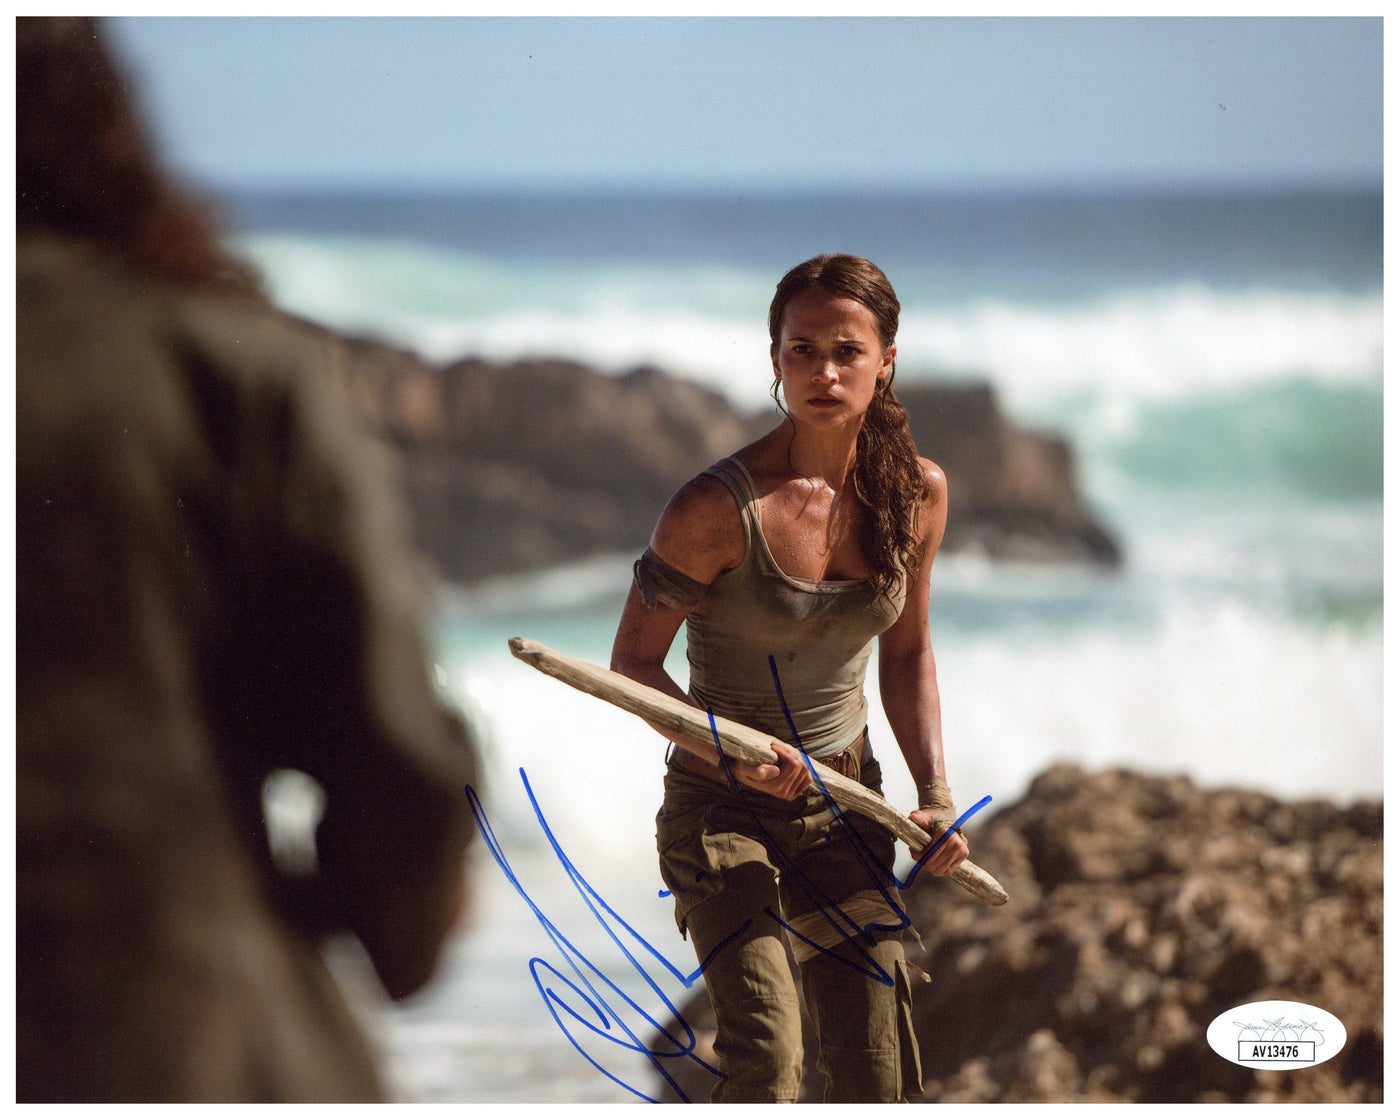 Alicia Vikander Signed 8x10 Photo Tomb Raider Autographed JSA COA #2